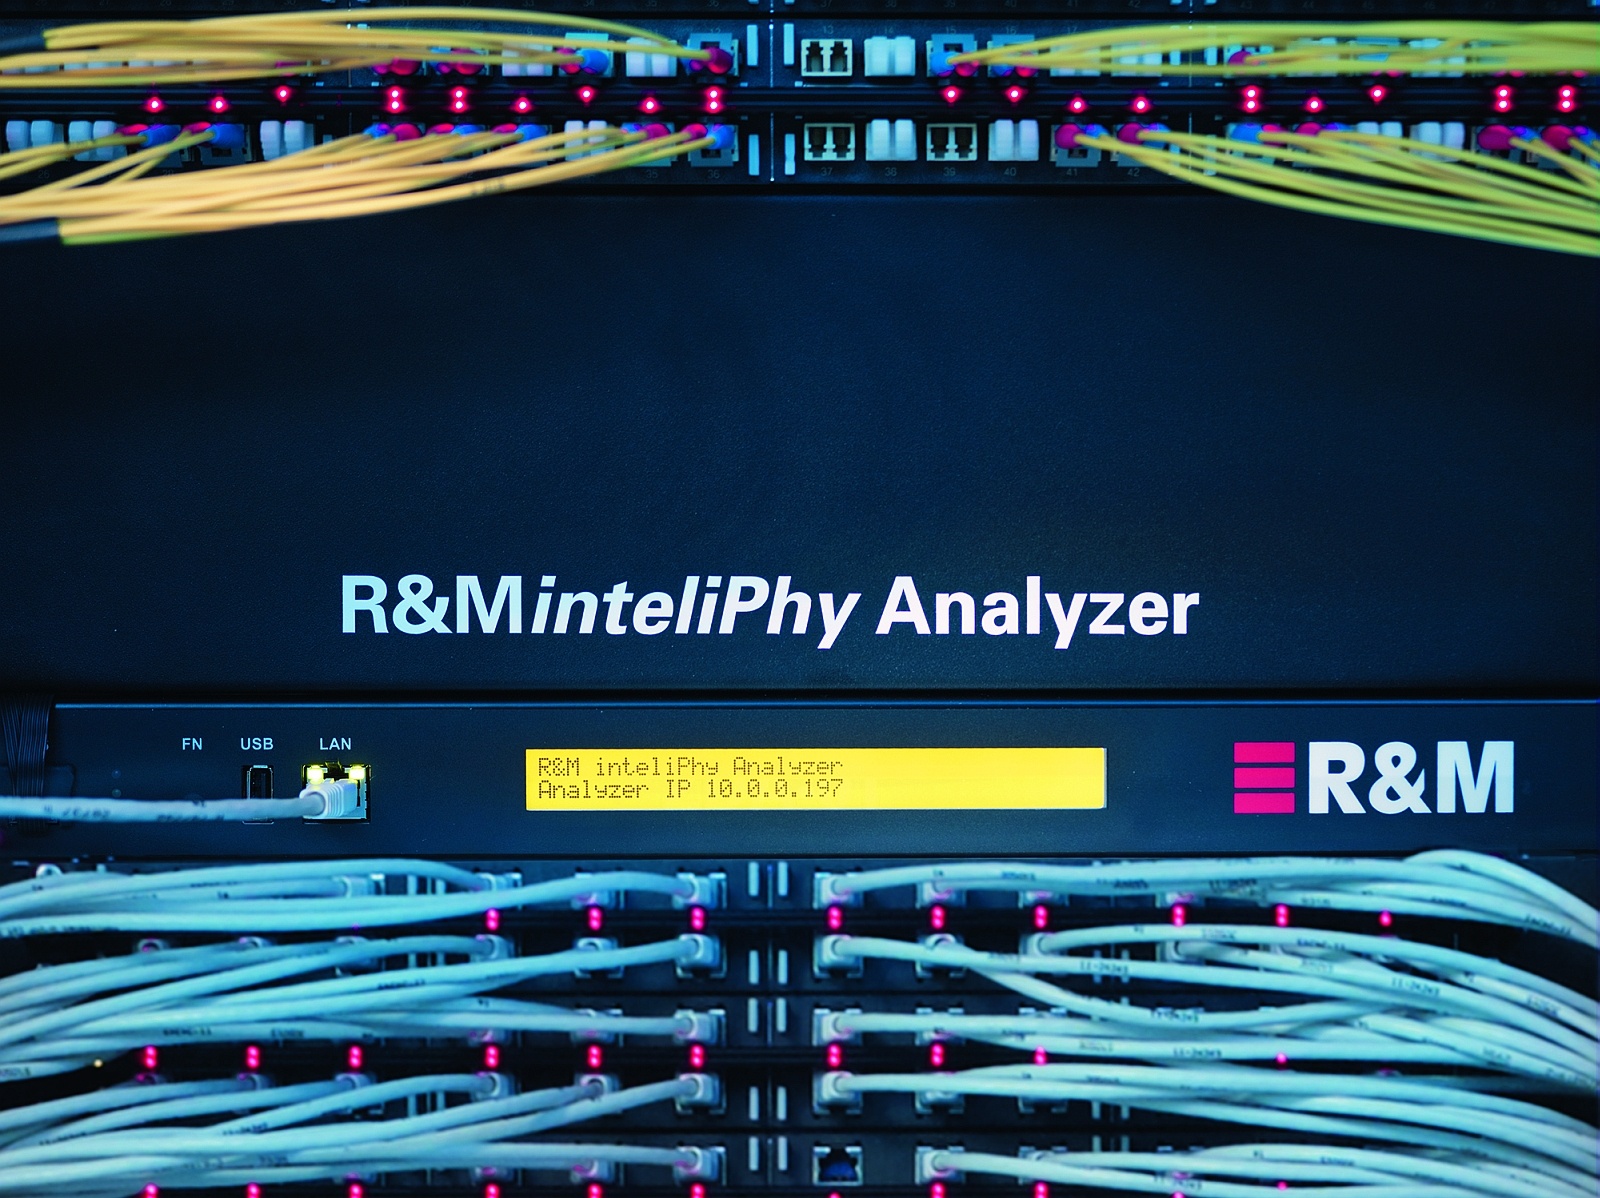 R&M reinforces R&MinteliPhy Analyzer